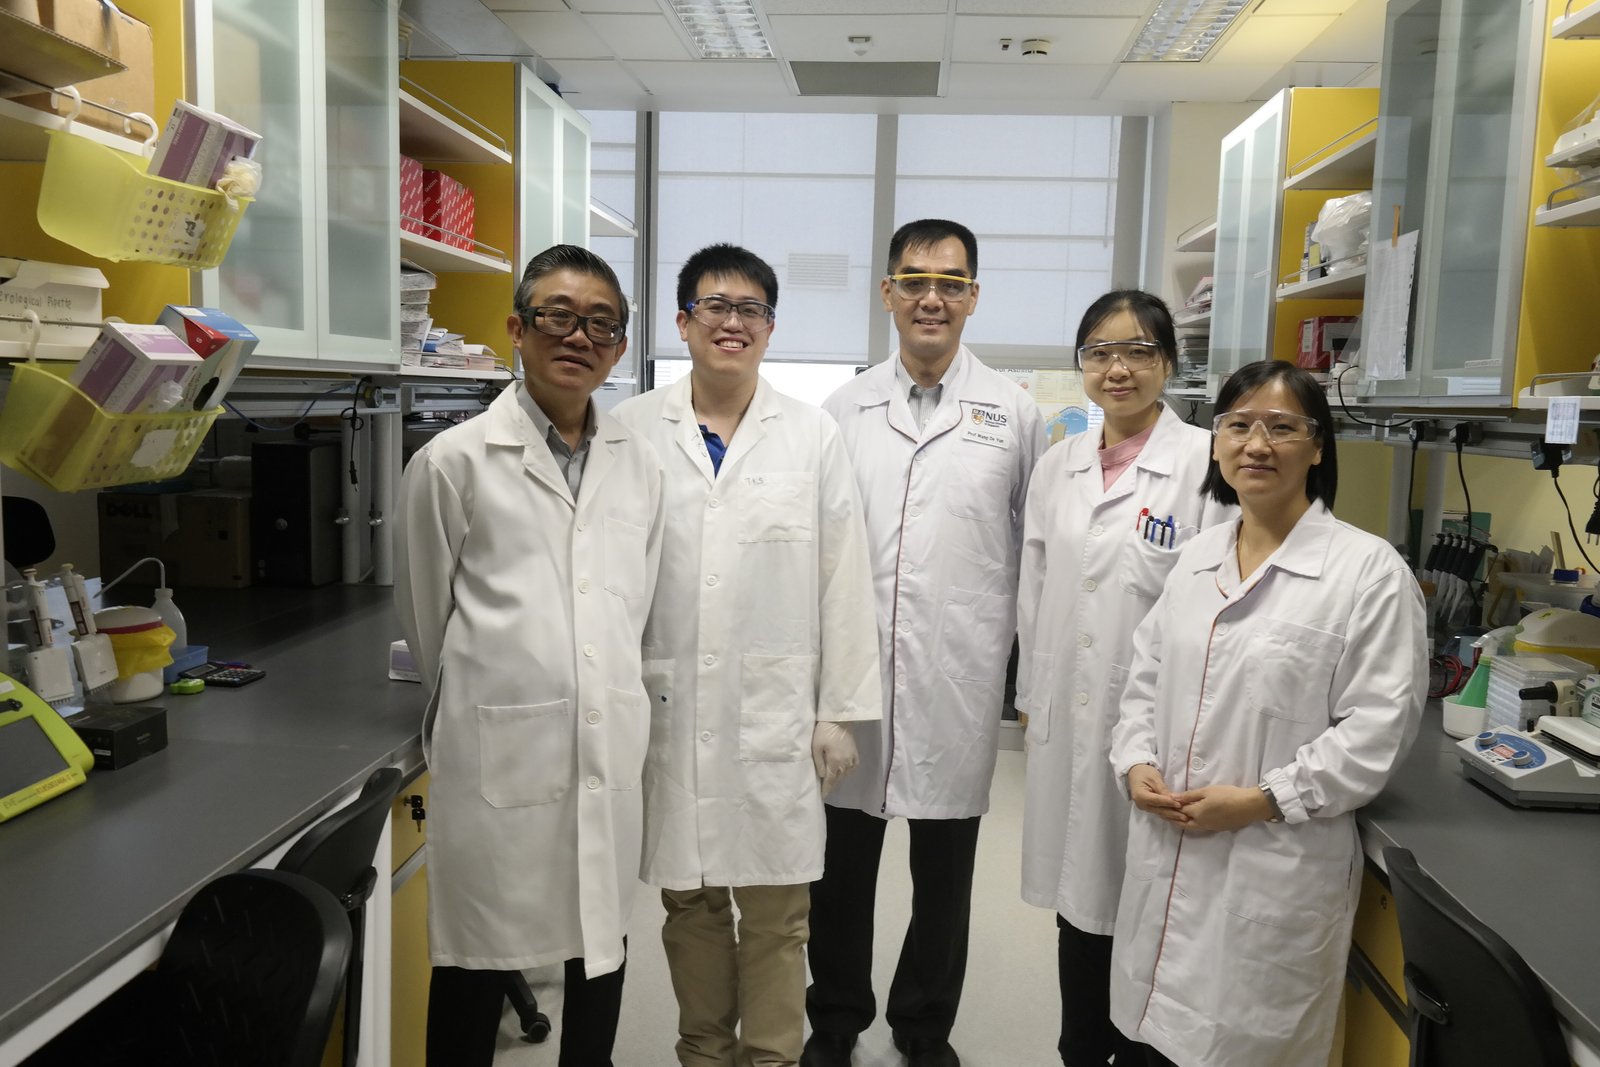 (from left to right): Assoc Prof Vincent Chow, Dr Kai Sen Tan, Prof Wang De Yun, Ms Qiao Yongkang and Asst Prof Thai Tran (lead PI).